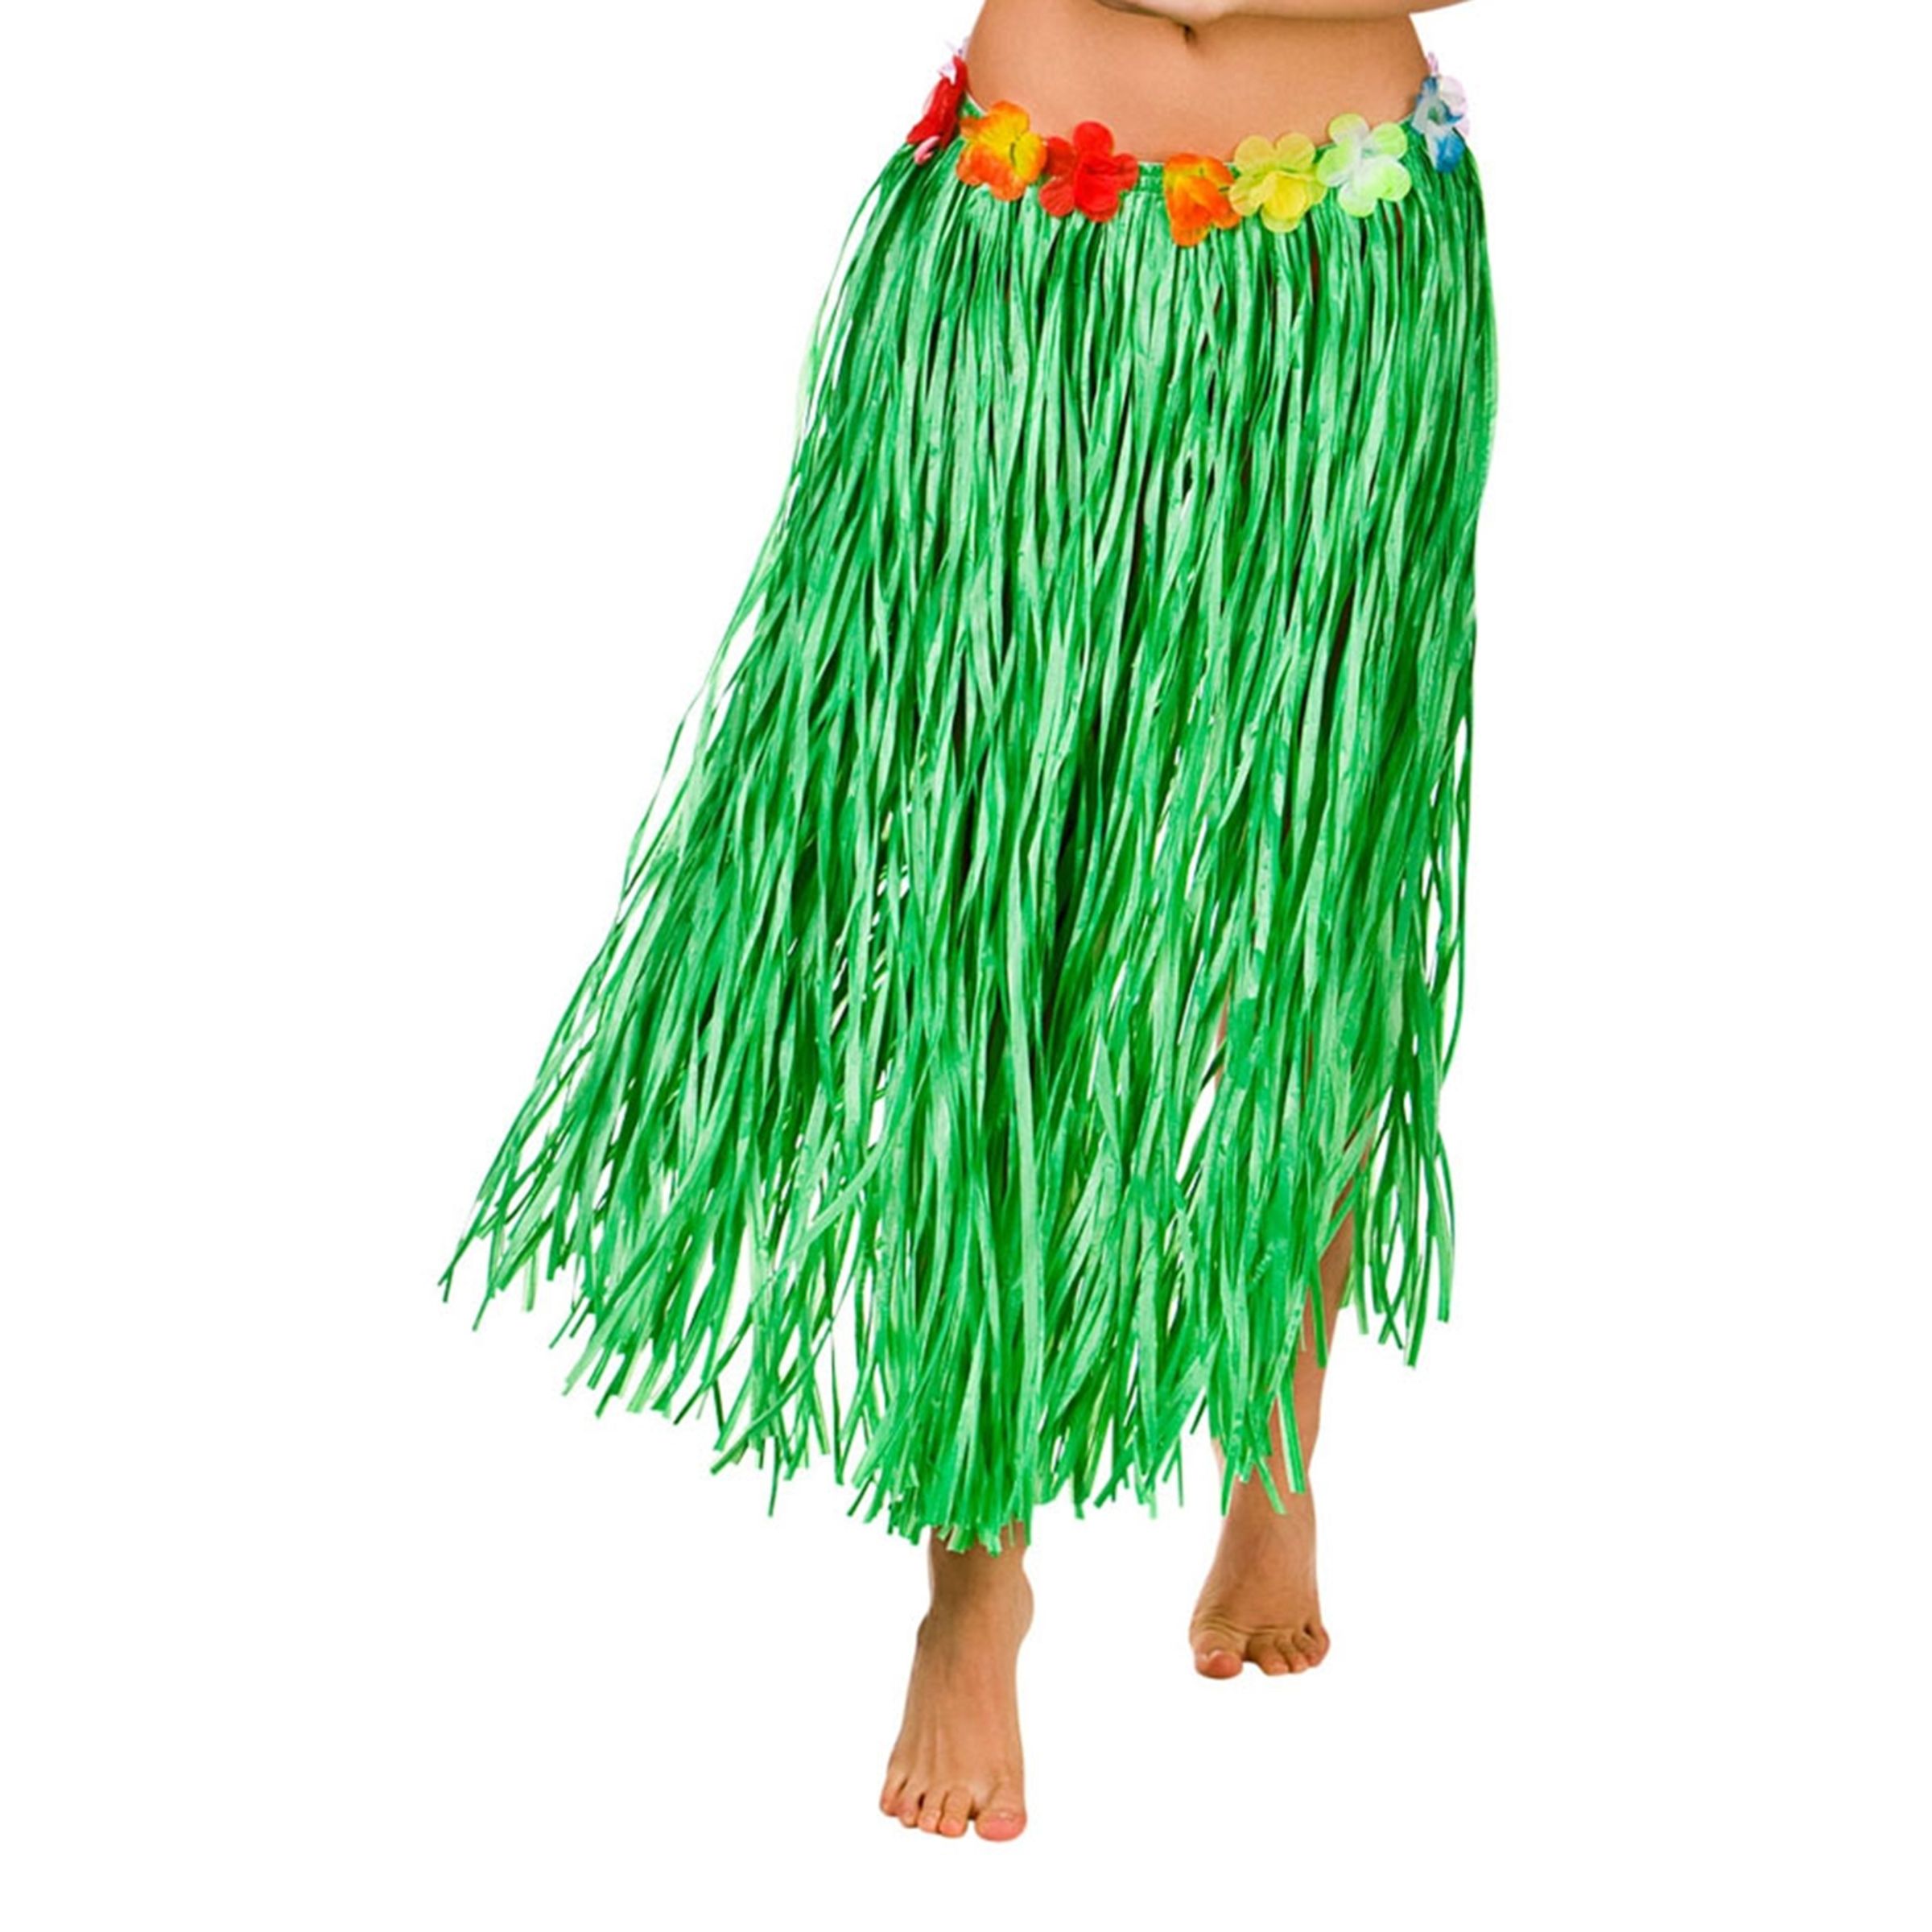 Hawaiikjol Grön - One size